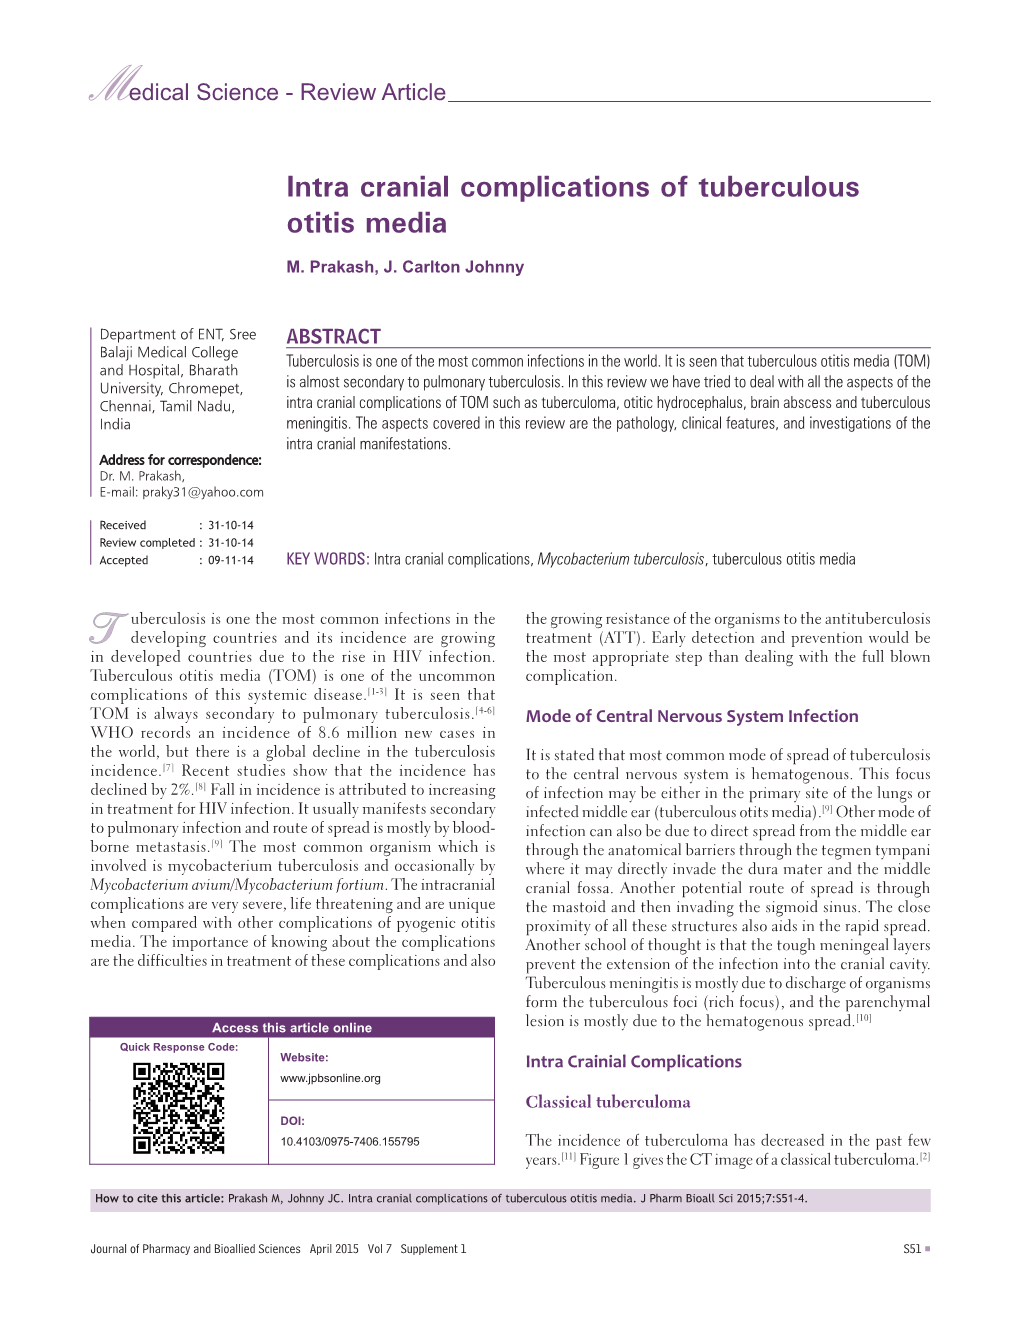 Intra Cranial Complications of Tuberculous Otitis Media